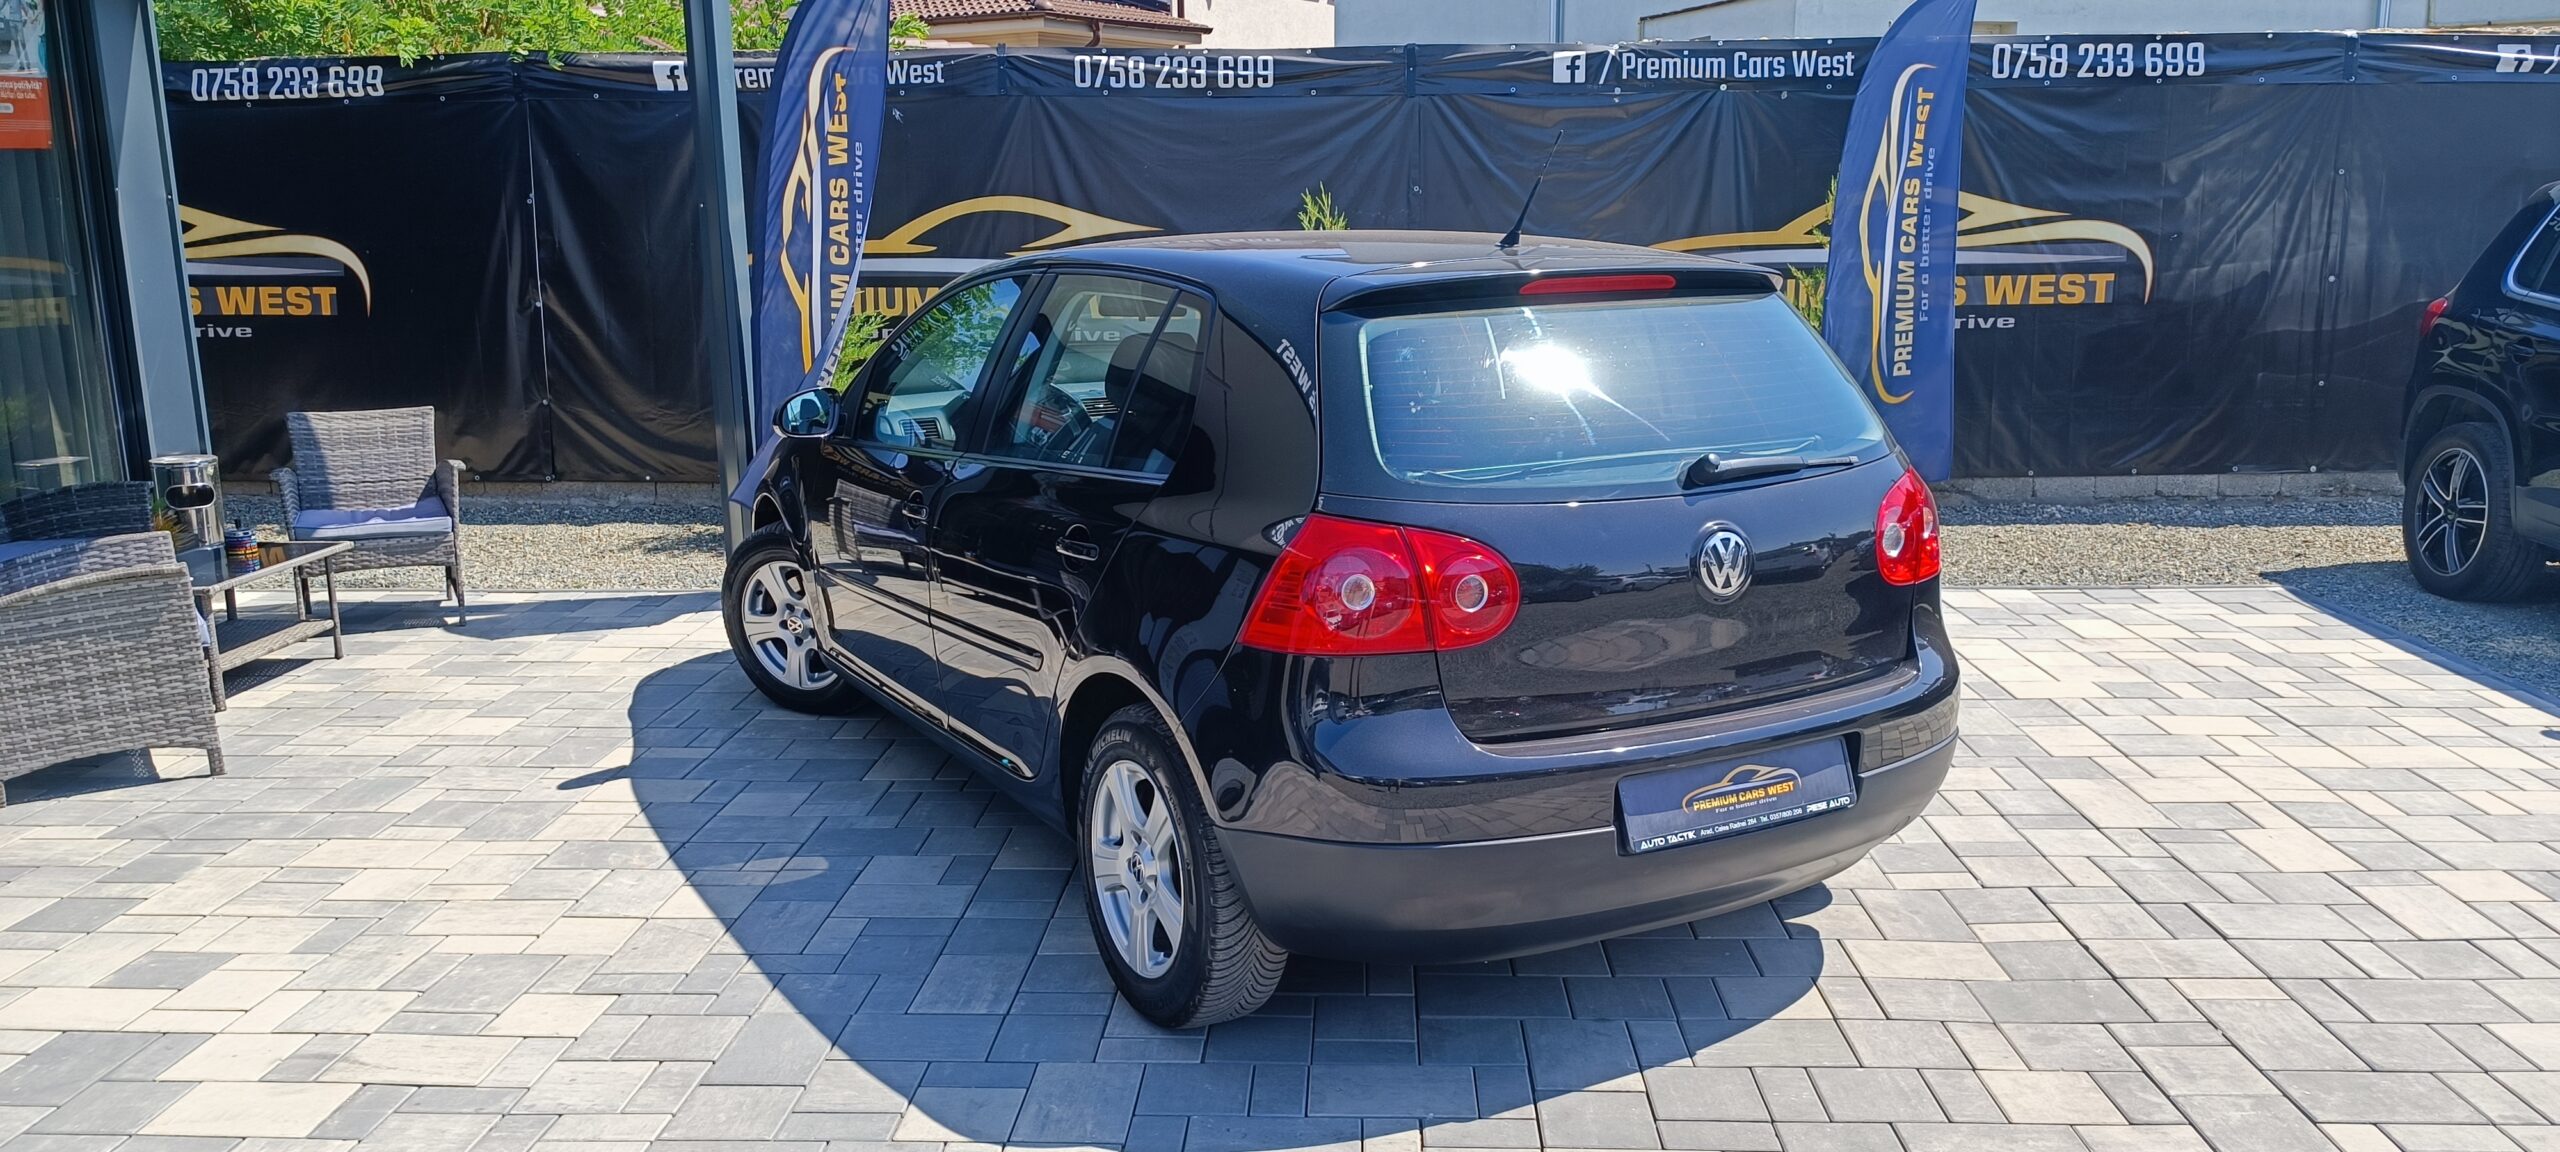 VW Golf 5  1.4 Benzina